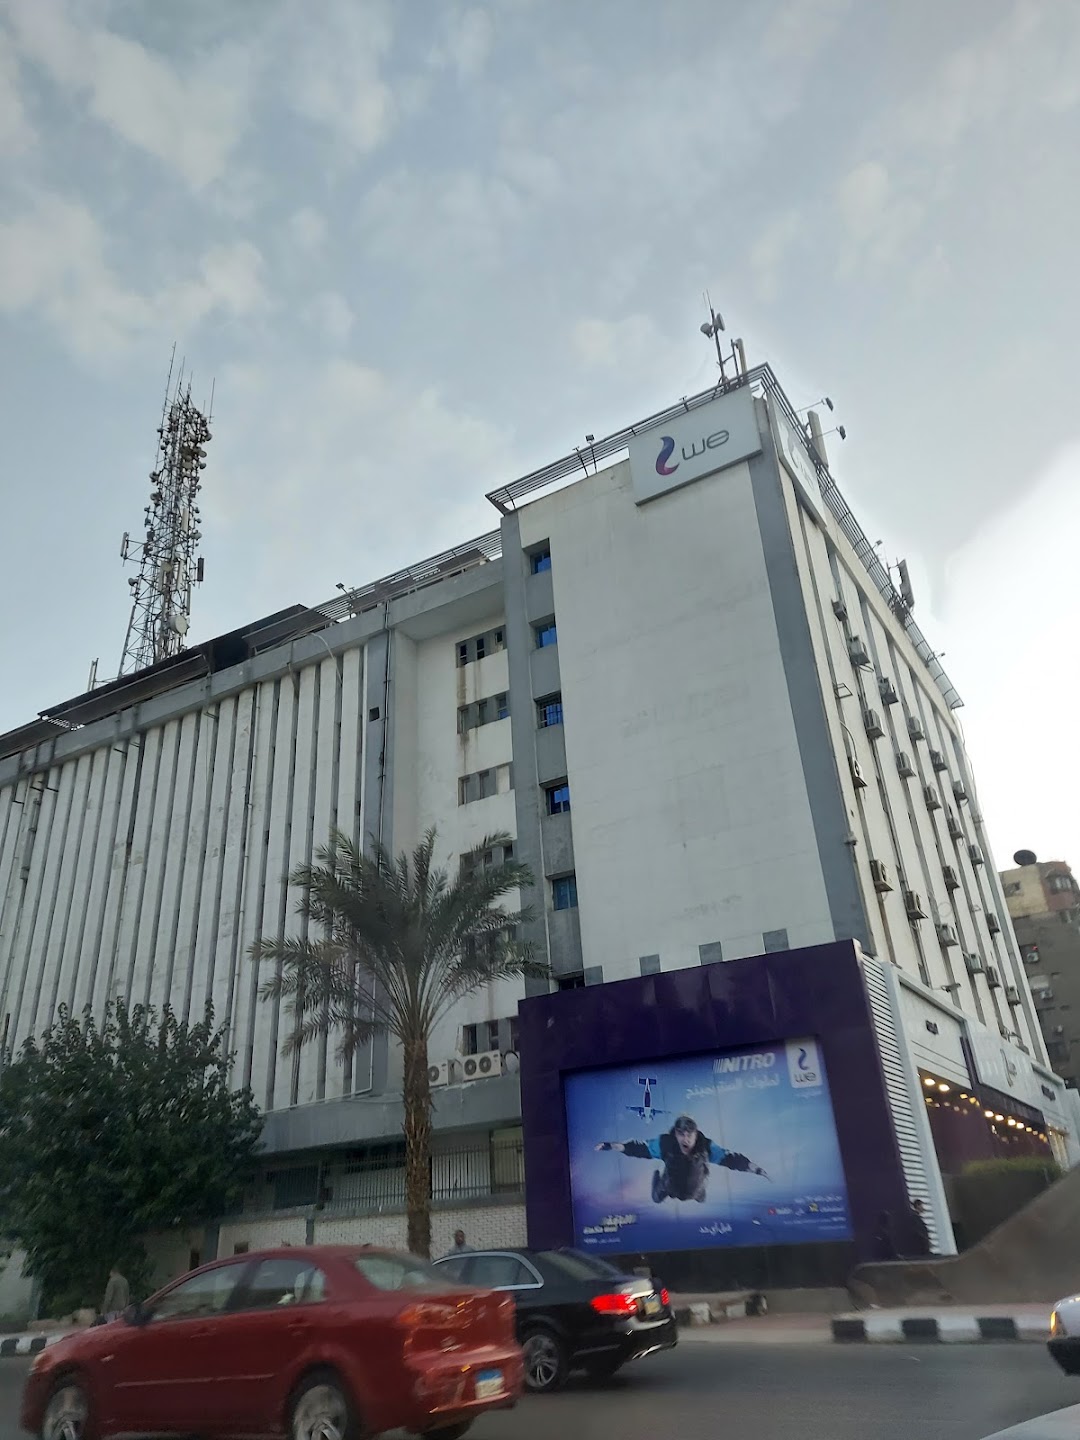 Telecom Egypt - Almaza Central